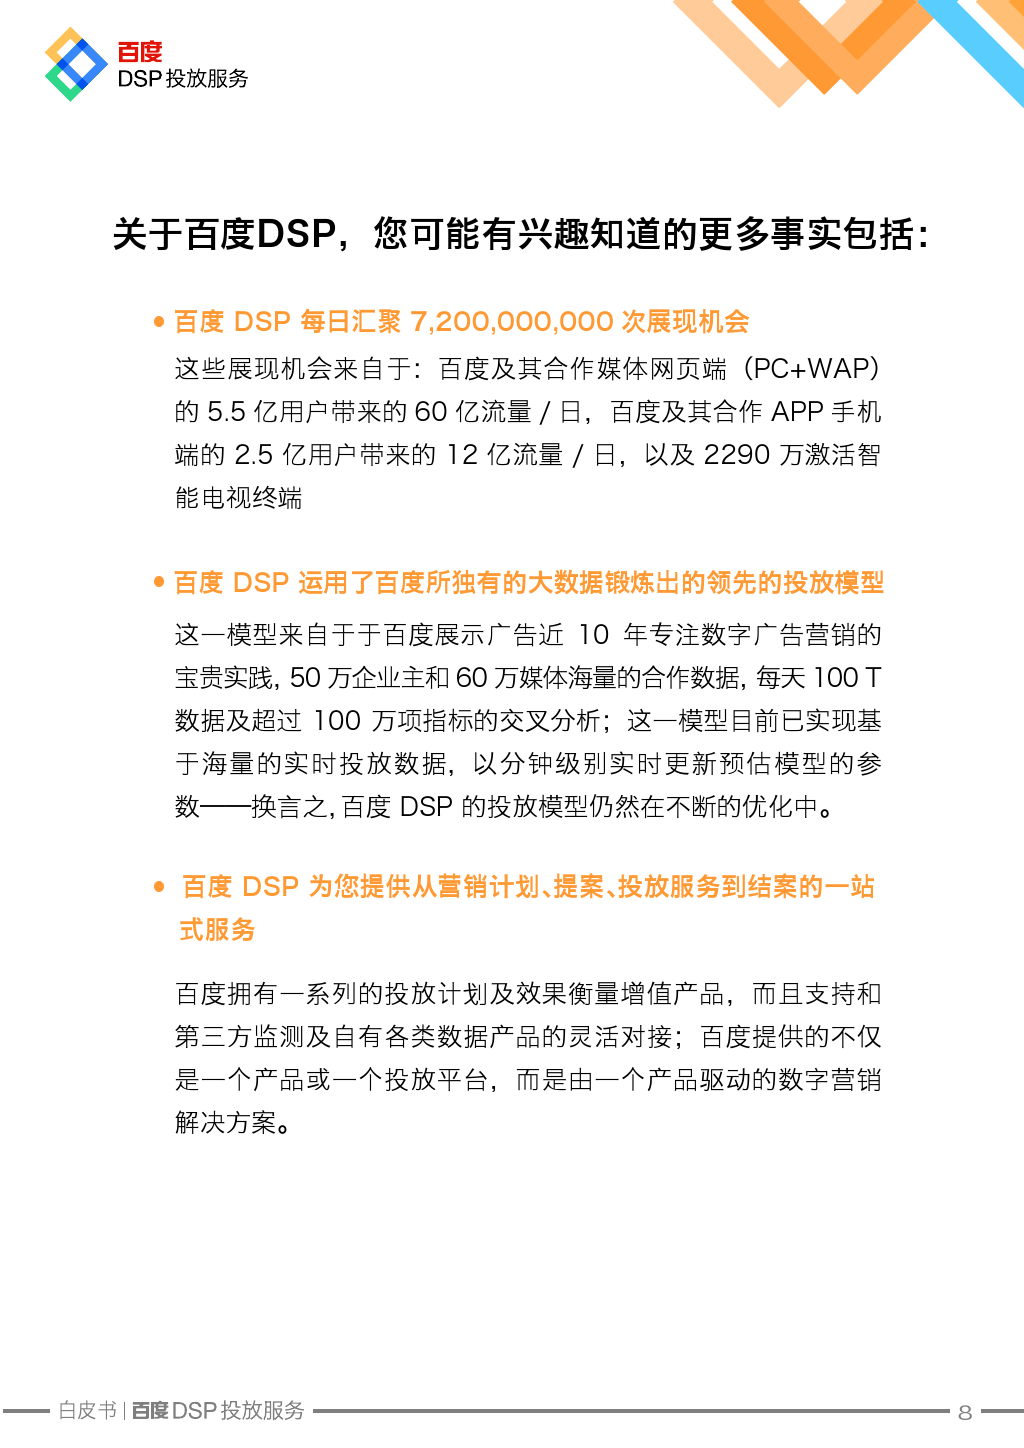 Baidu DSP Service White Paper_000009